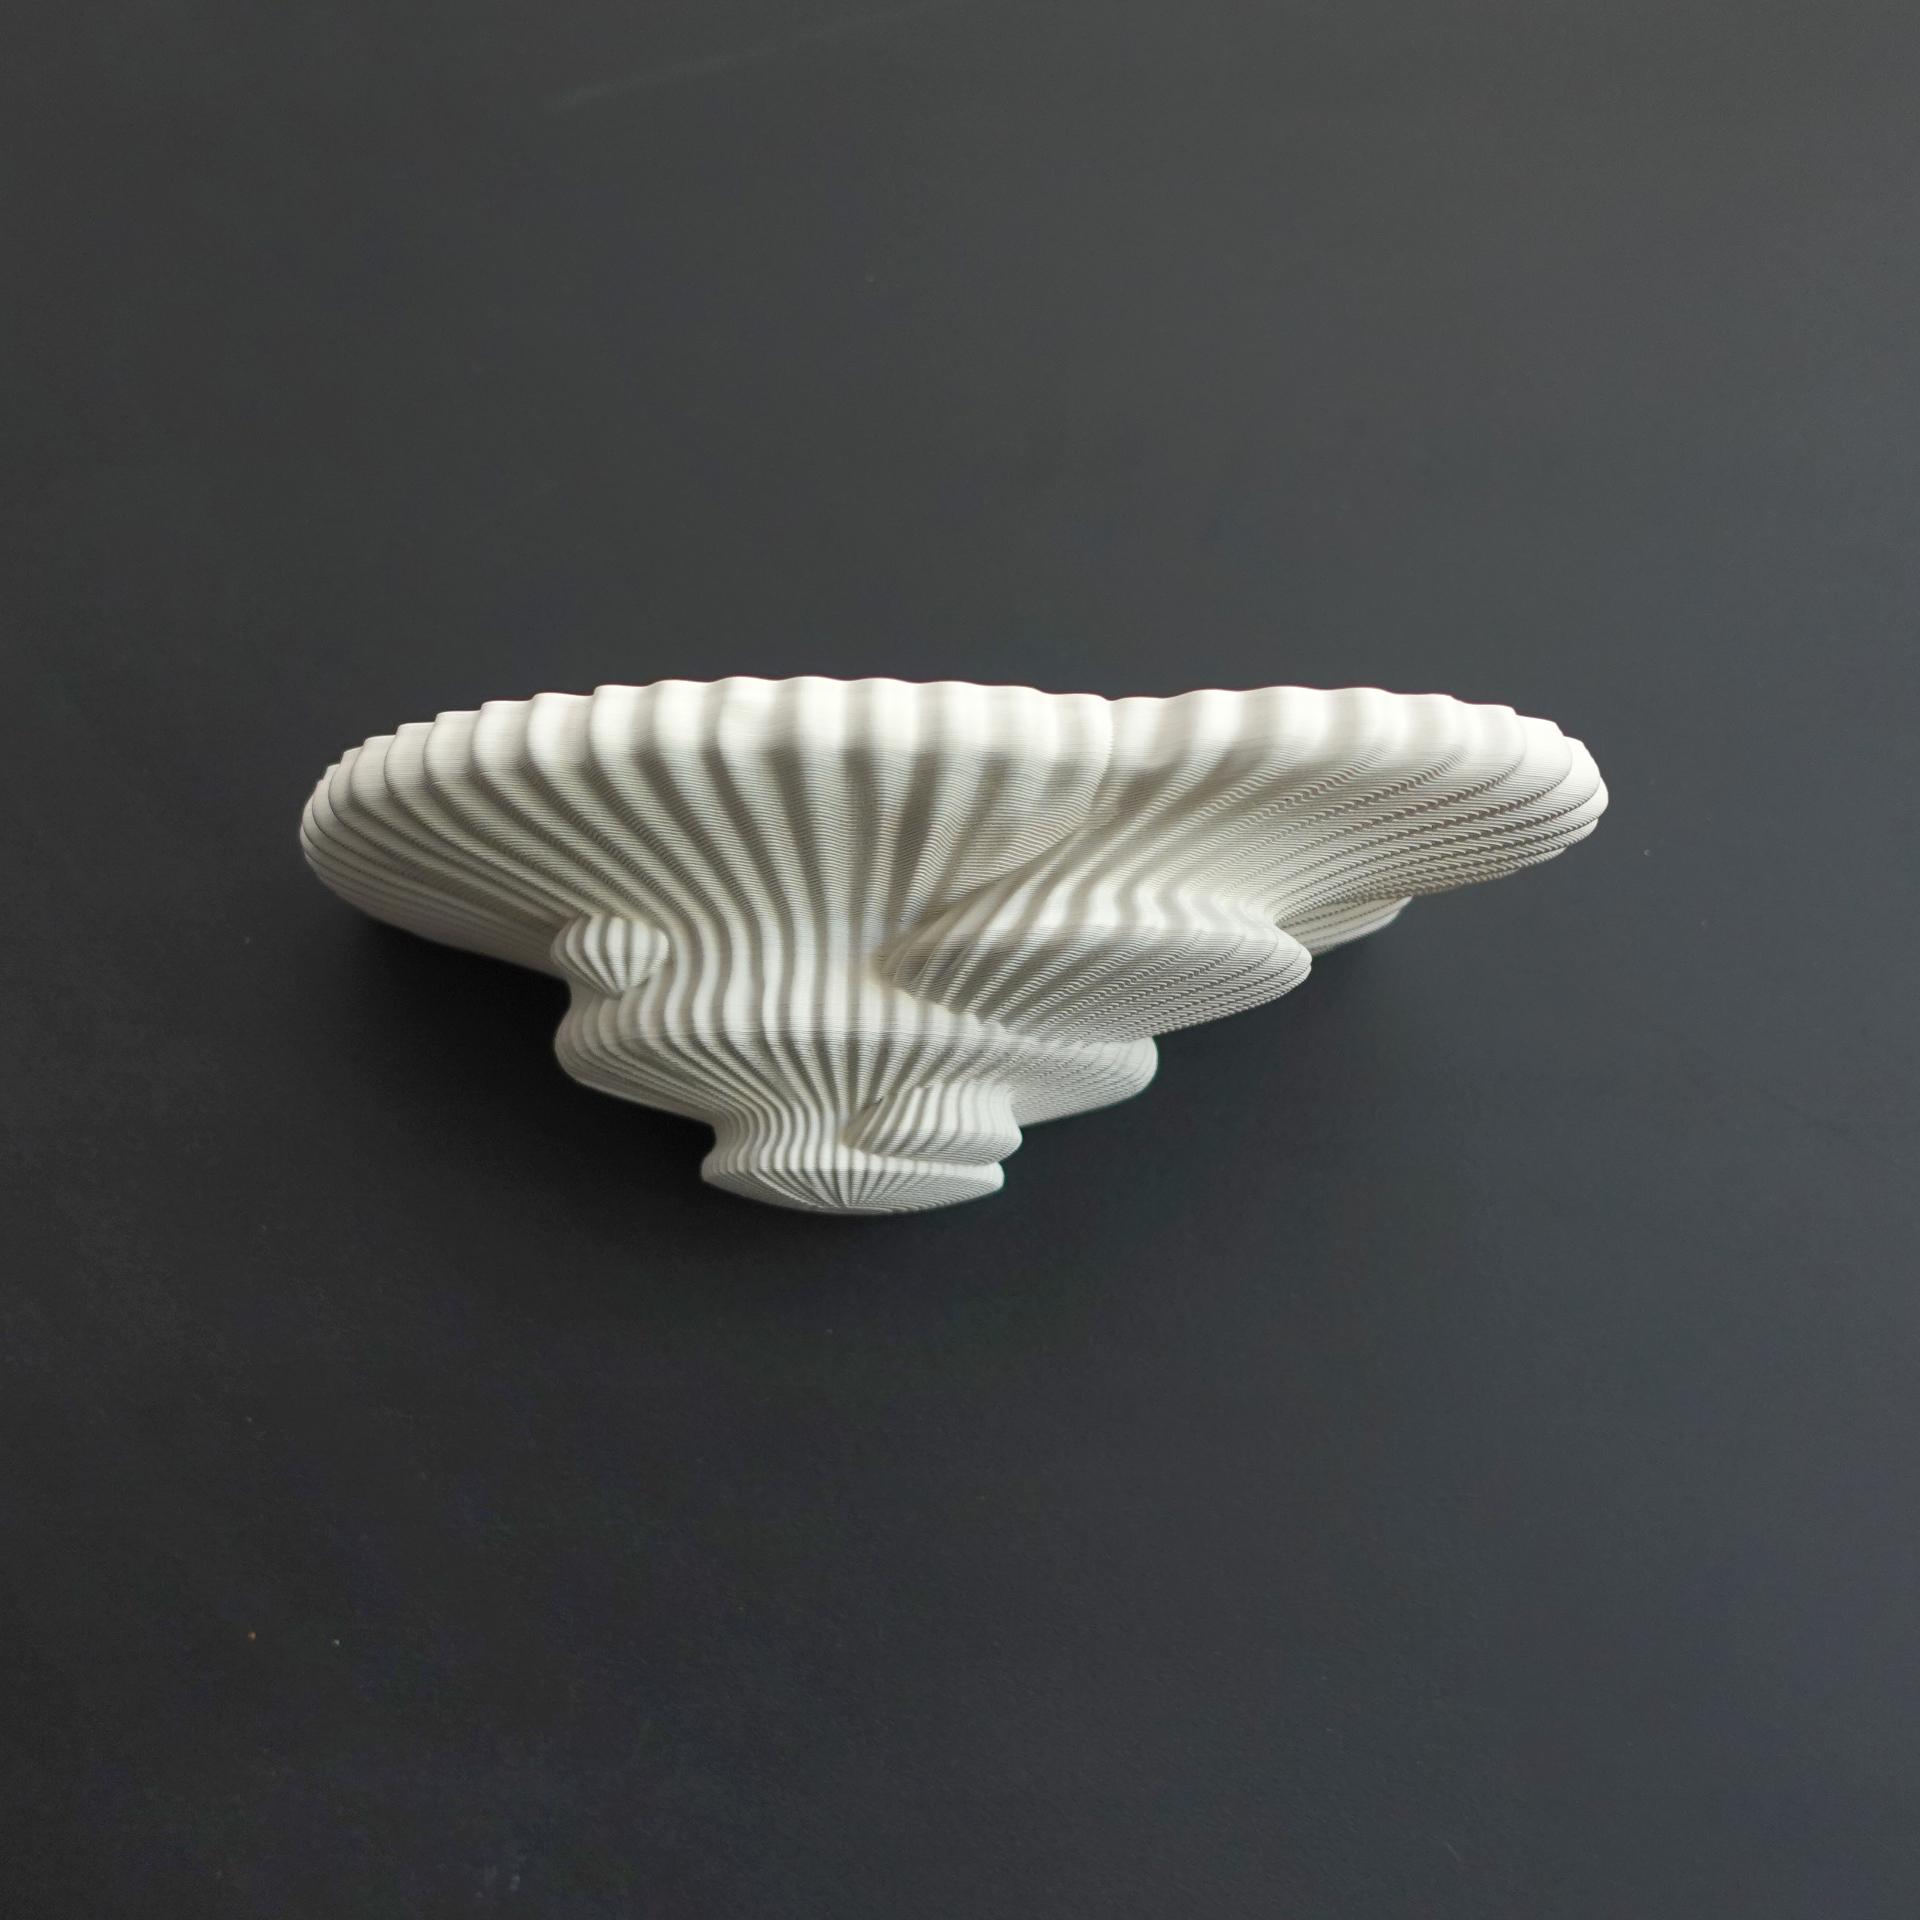 Mushroom shelf “Tinder” 3d model